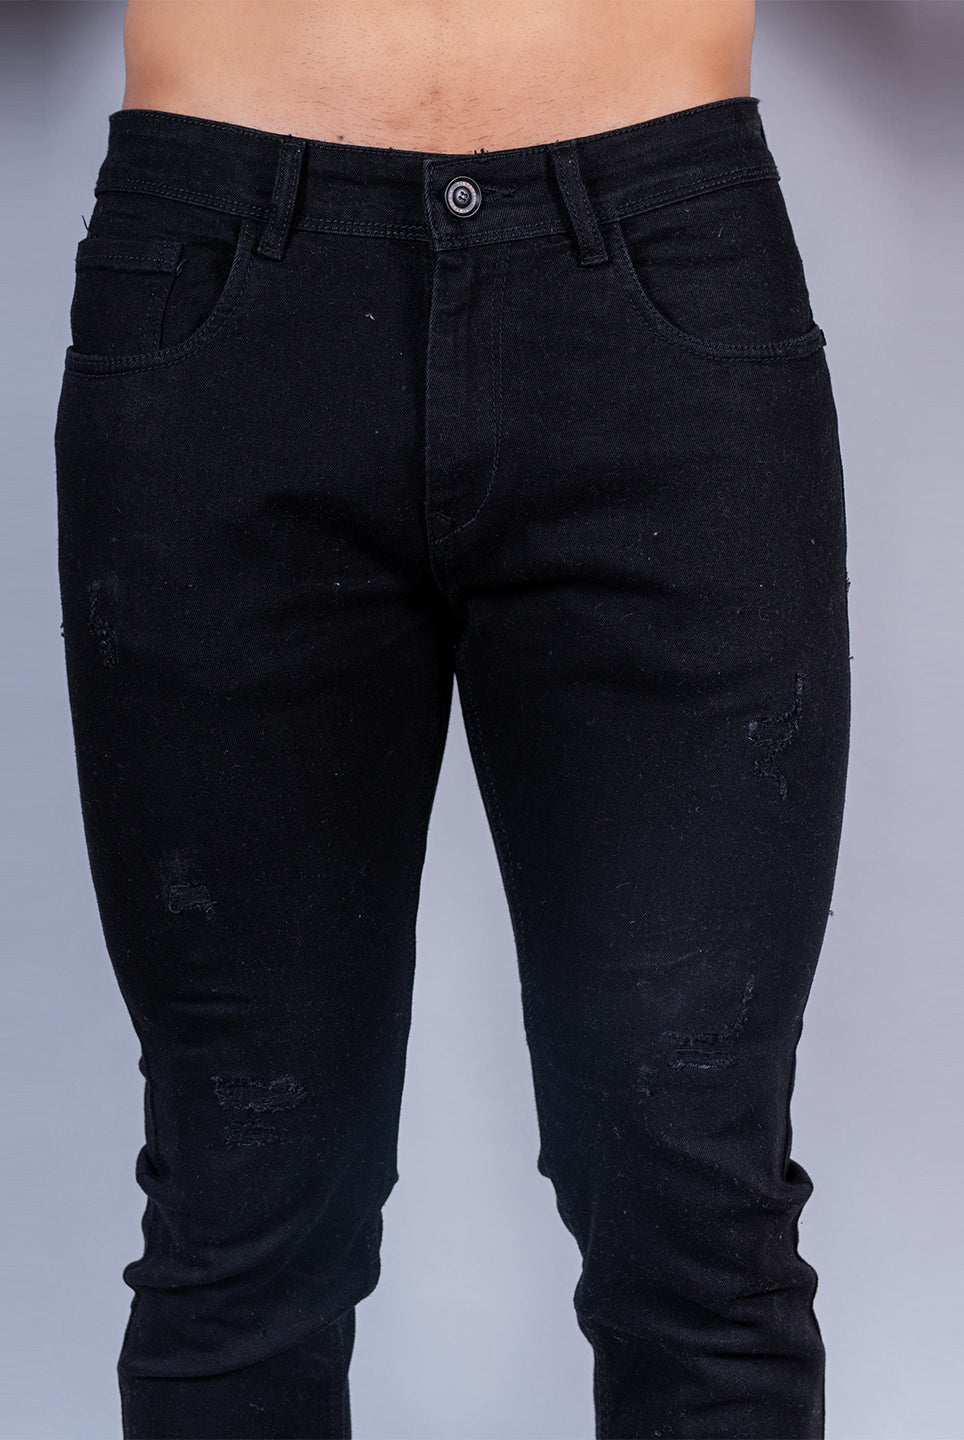 black denim jeans mens